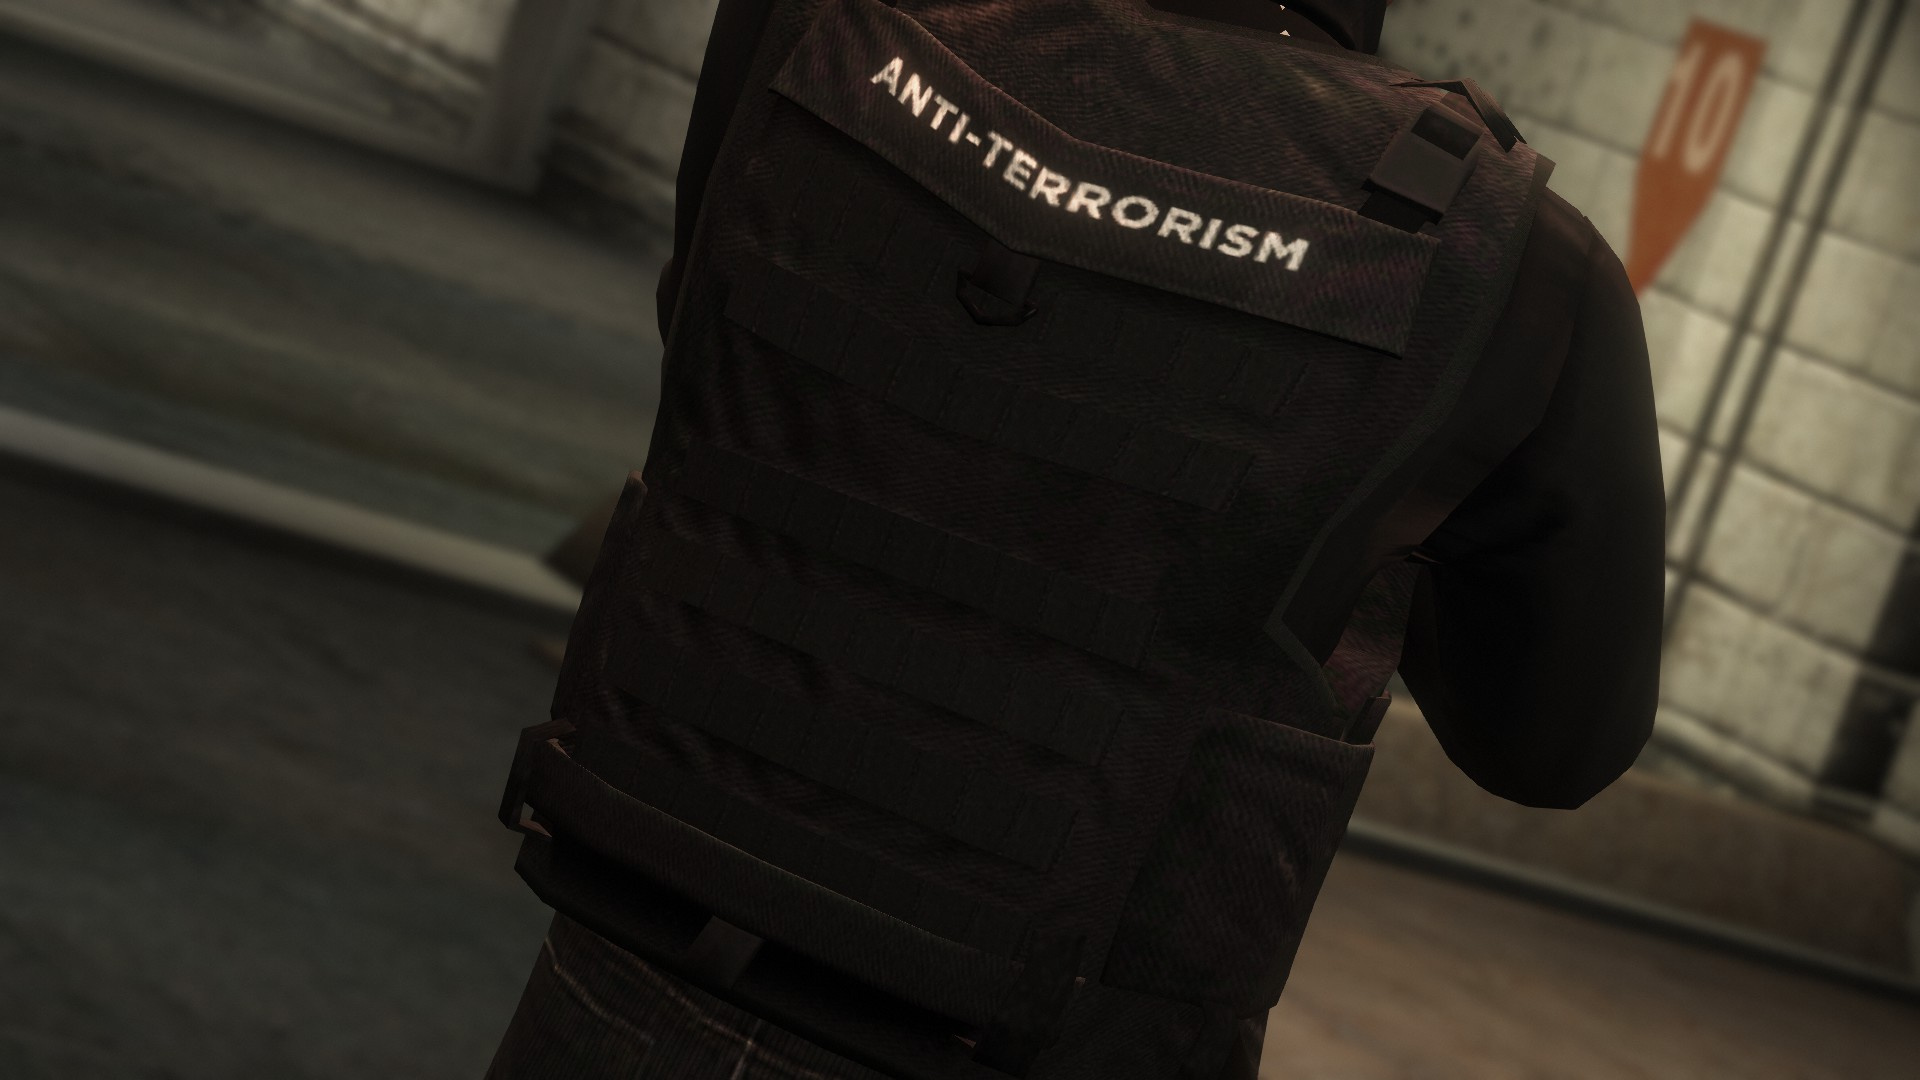 FIB Anti Terrorism Unit Armour Texture for EUP - GTA5-Mods.com